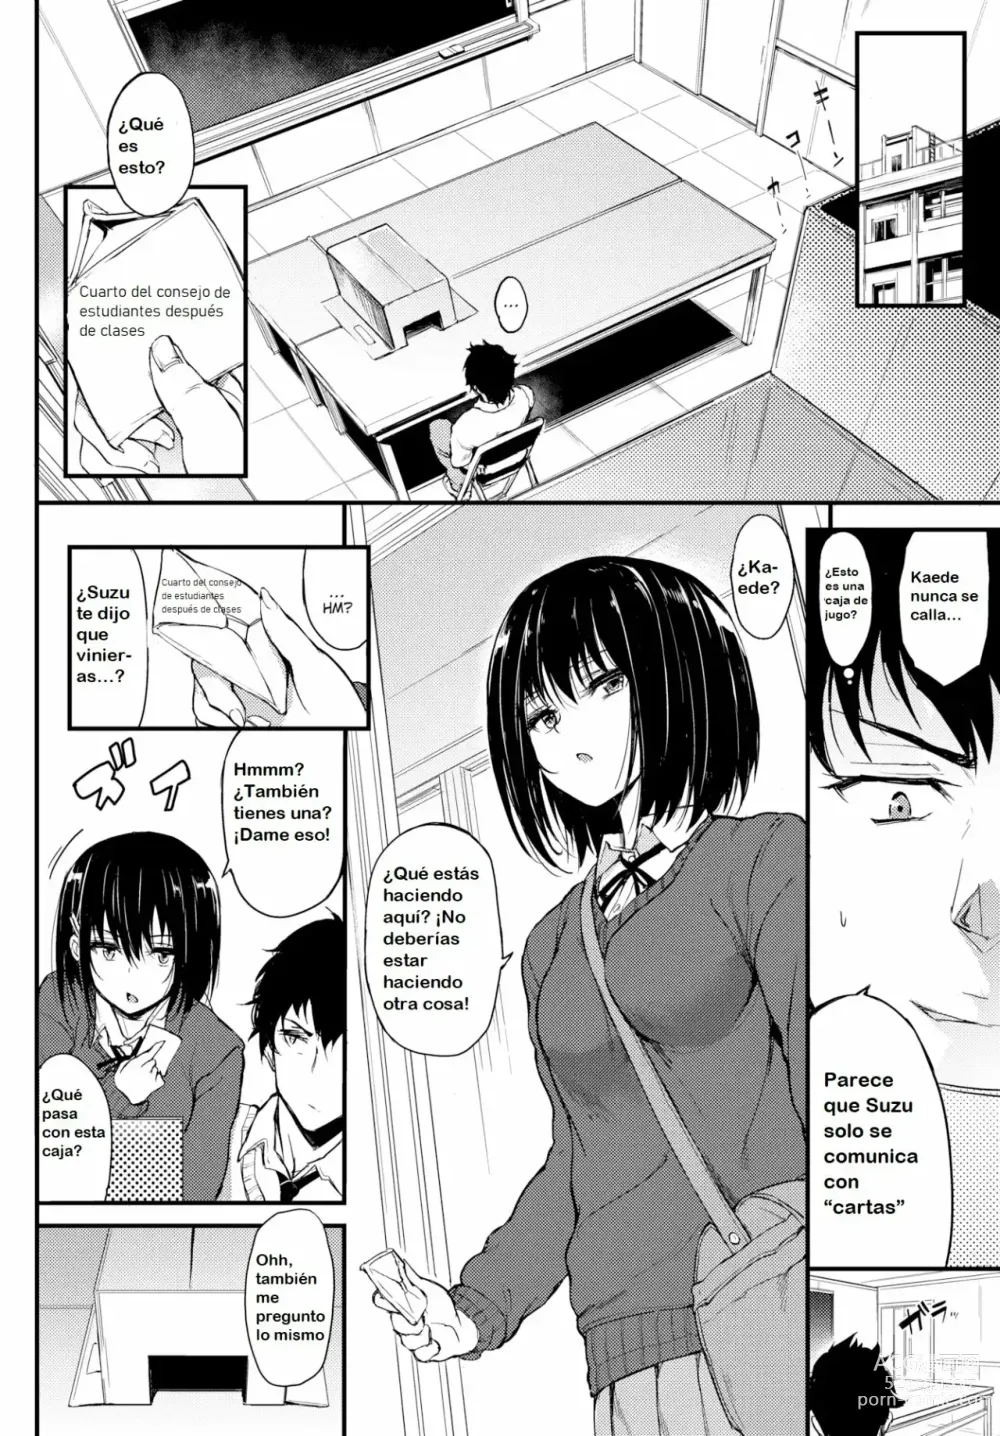 Page 3 of doujinshi Kaede & Suzu 1-7, Spanish.